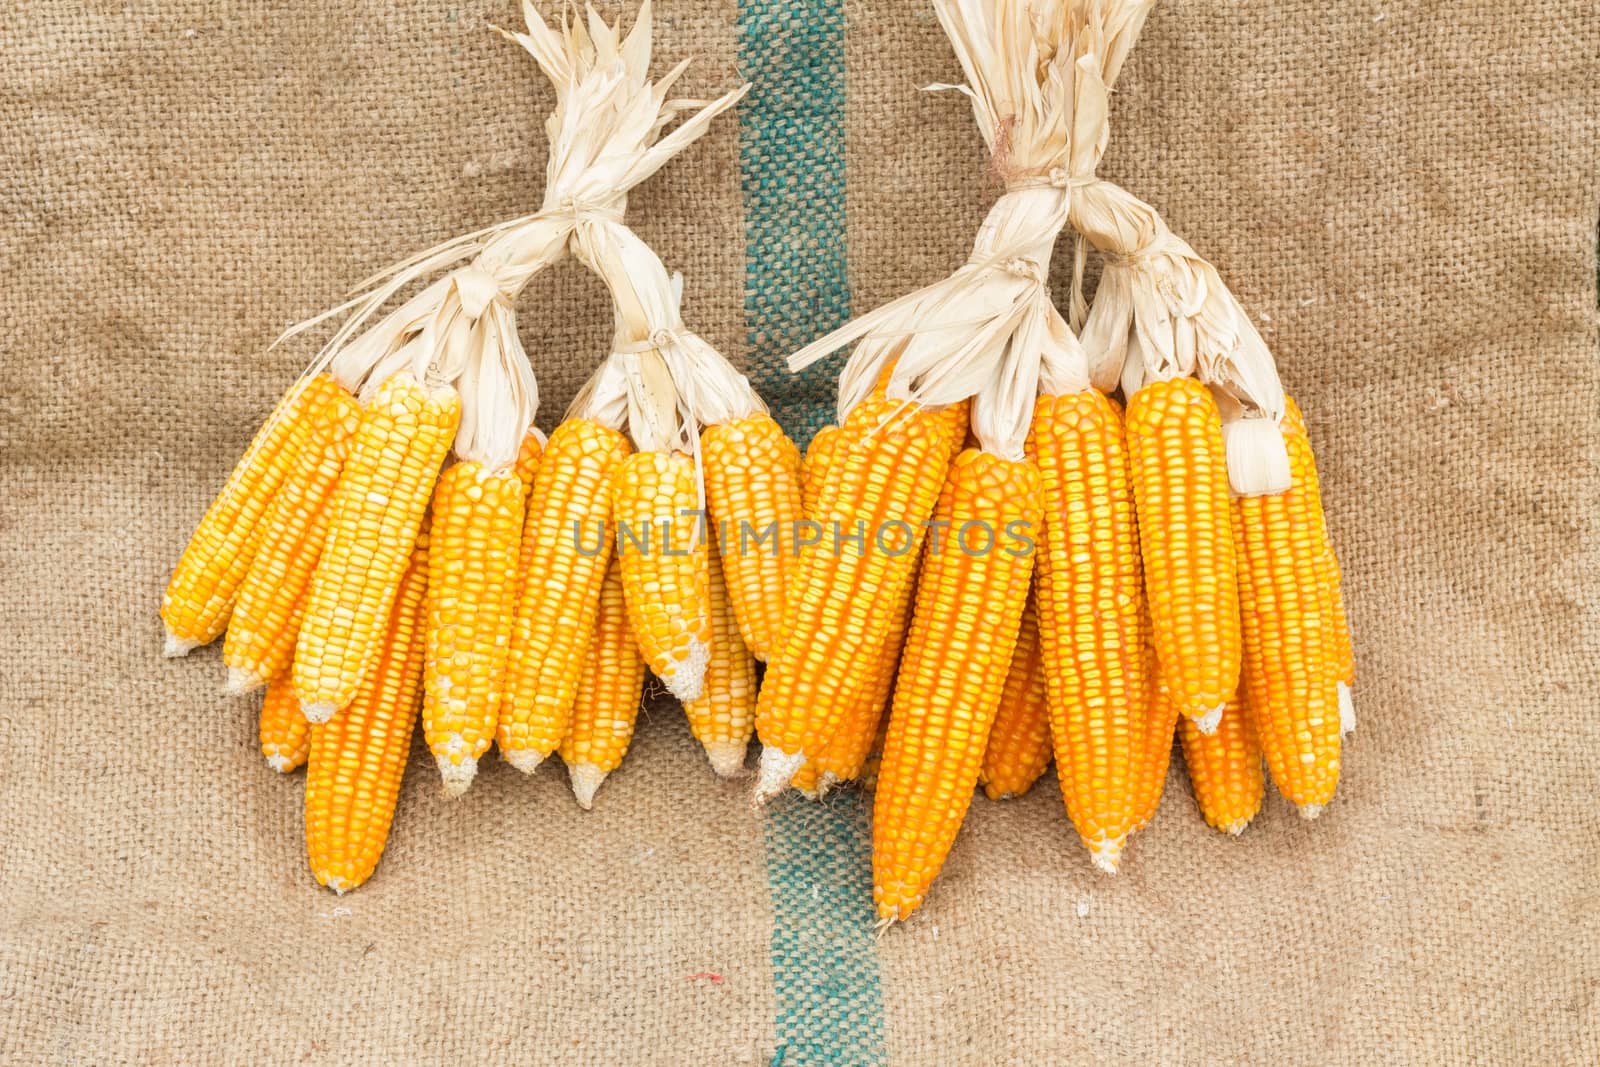 Ears of ripe corn on the gunnysack